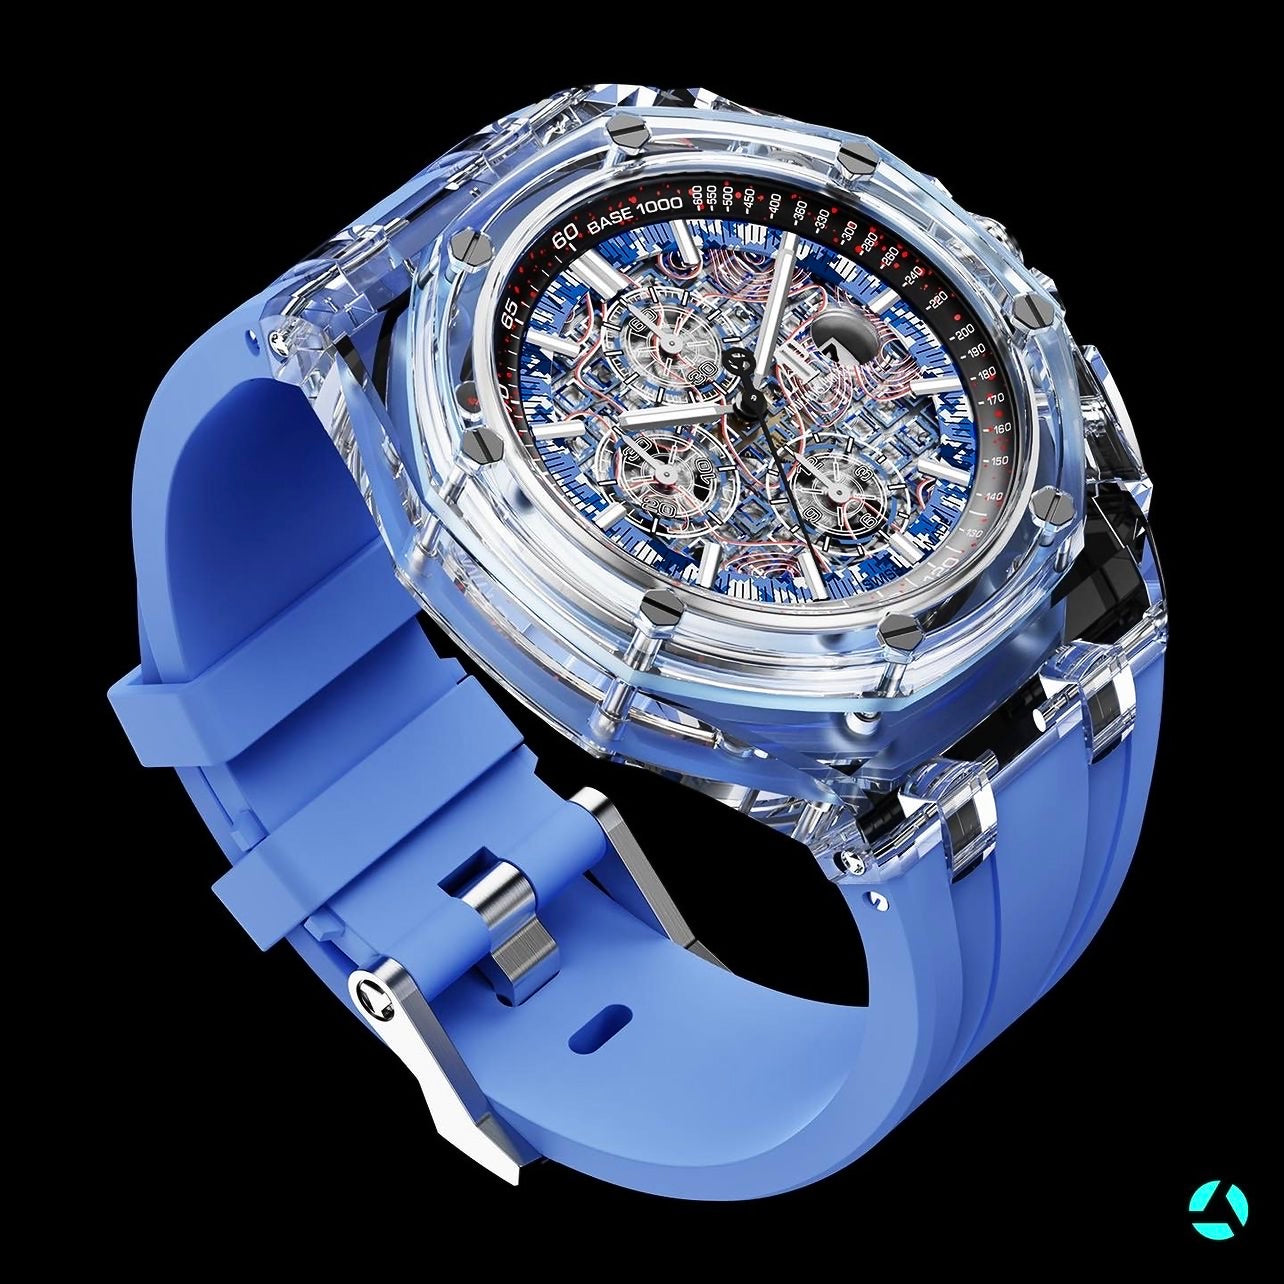 AET REMOULD 愛彼皇家橡樹離岸型 AZURE BLUE 藍寶石水晶透明手錶 | WORLDTIMER